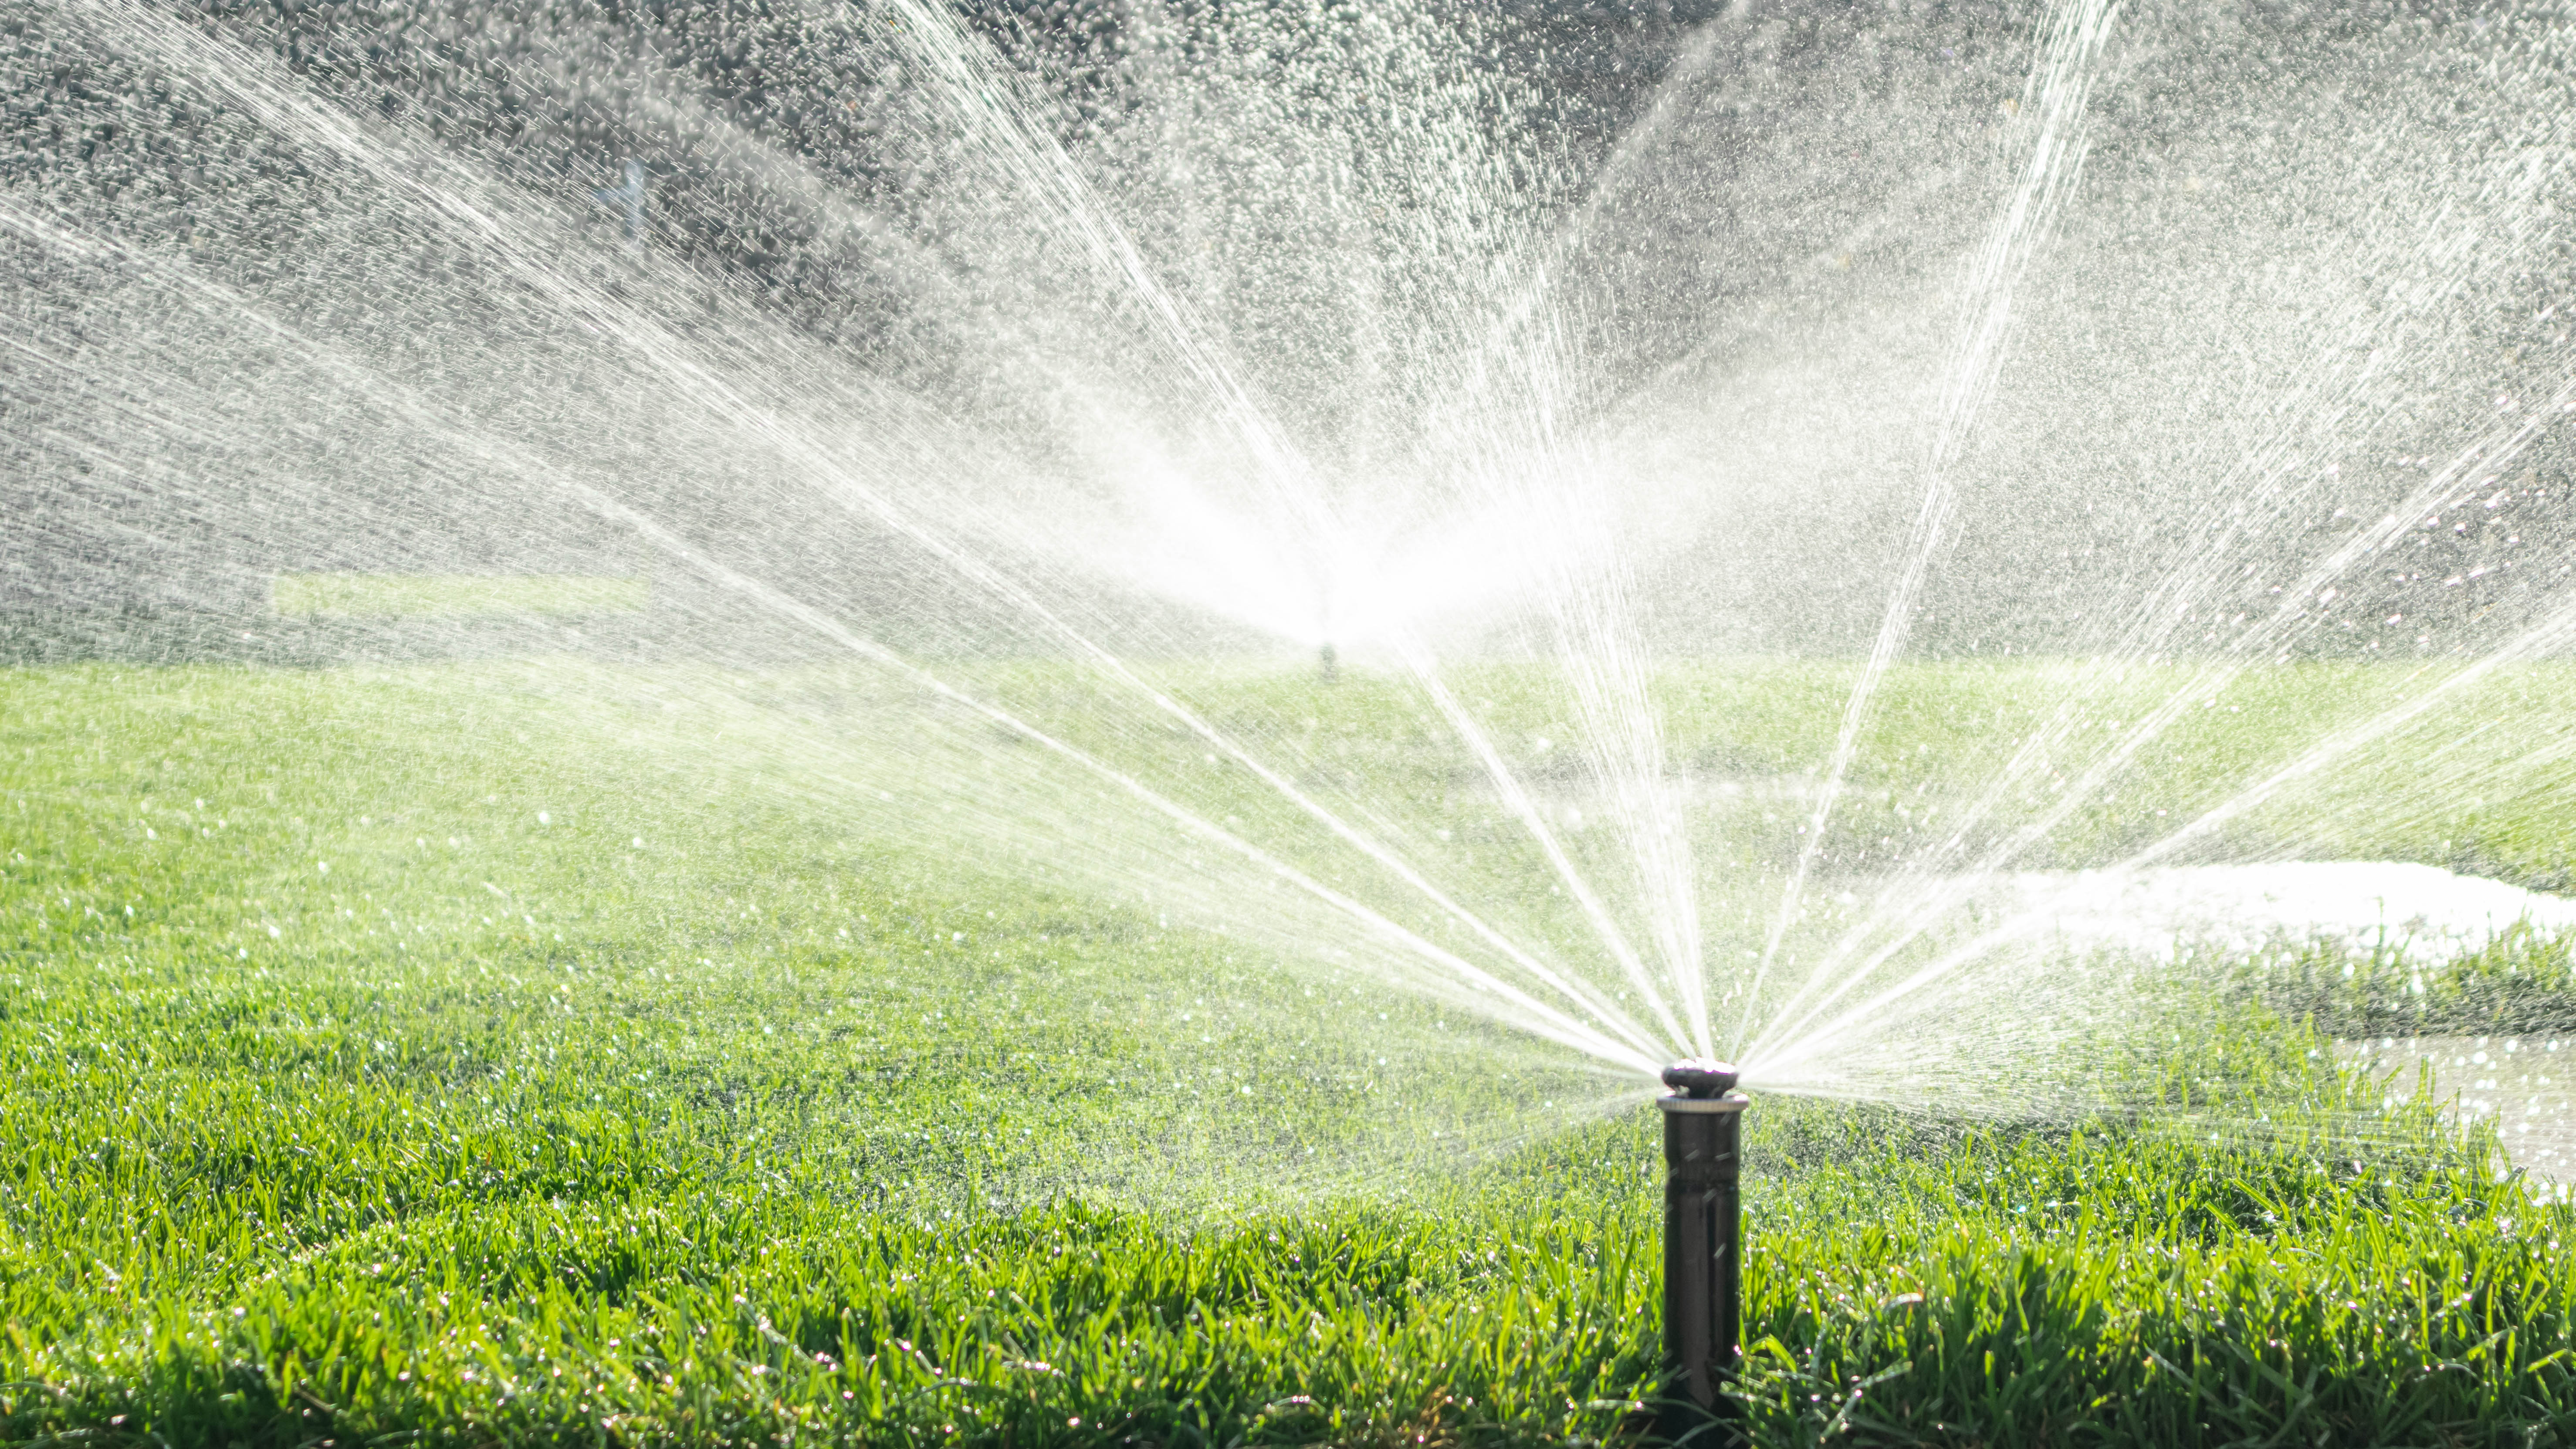 Watering lawn with sprinklers